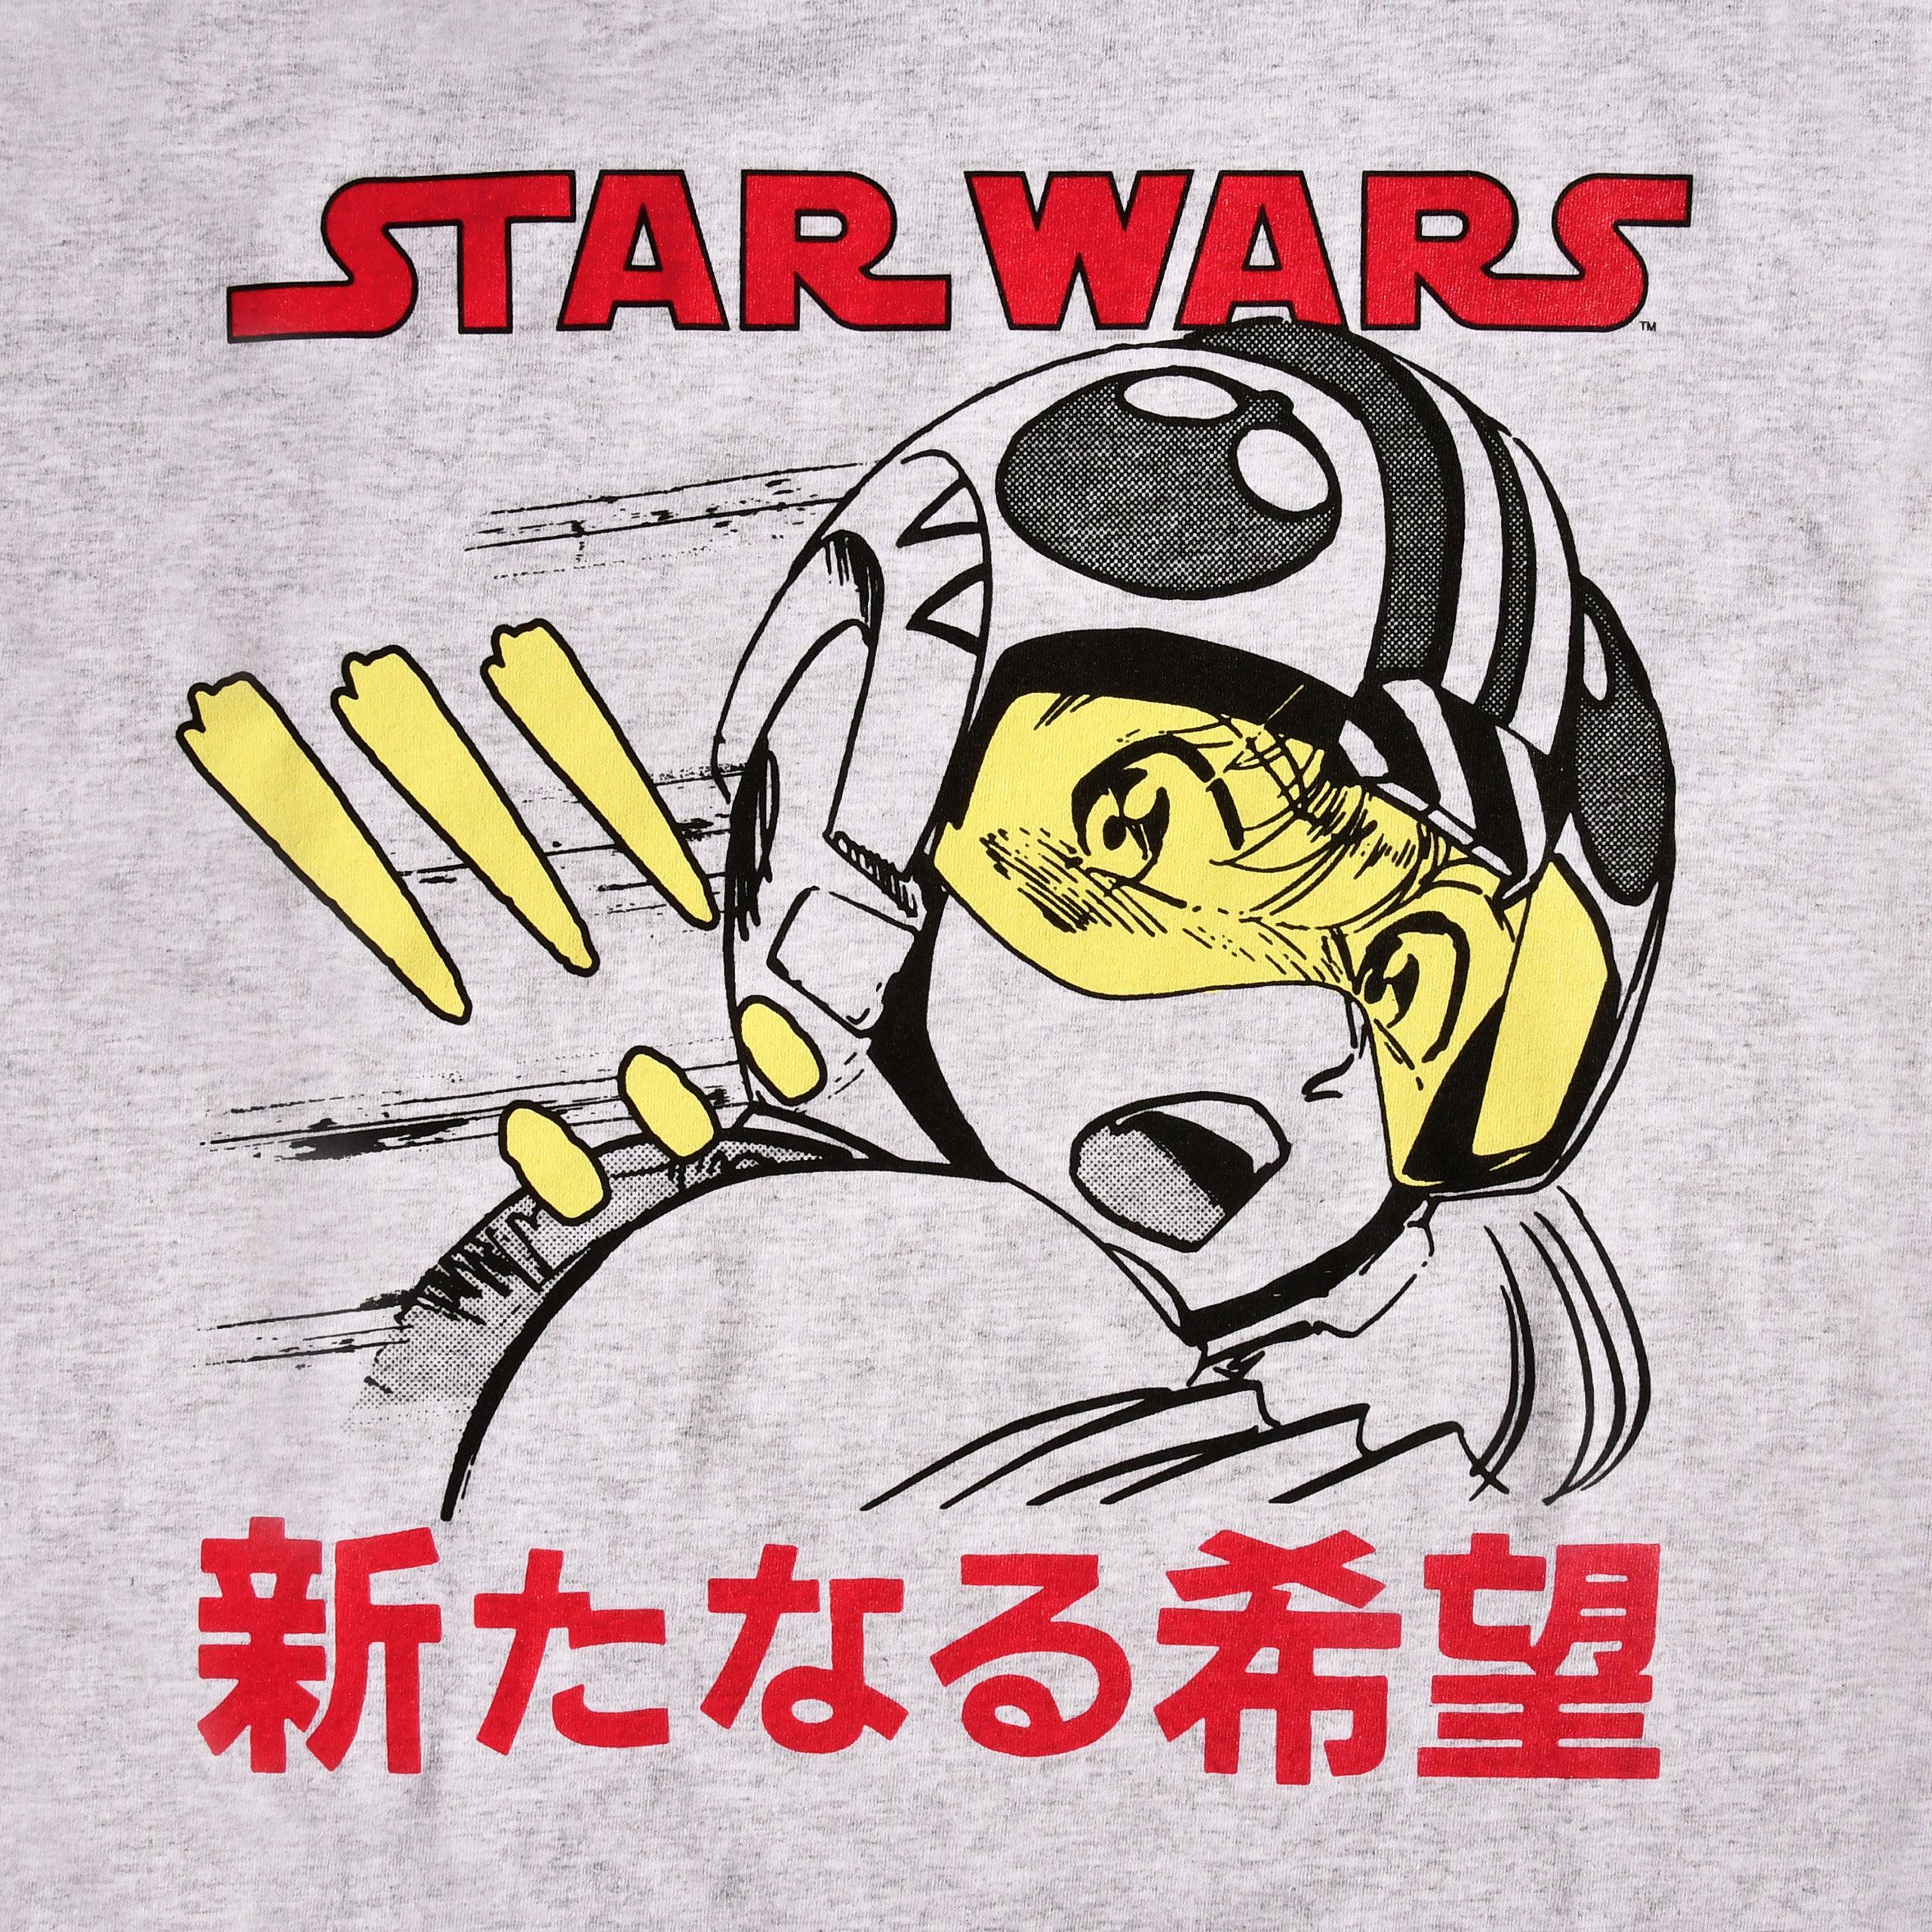 Star Wars - Luke Anime T-Shirt grau